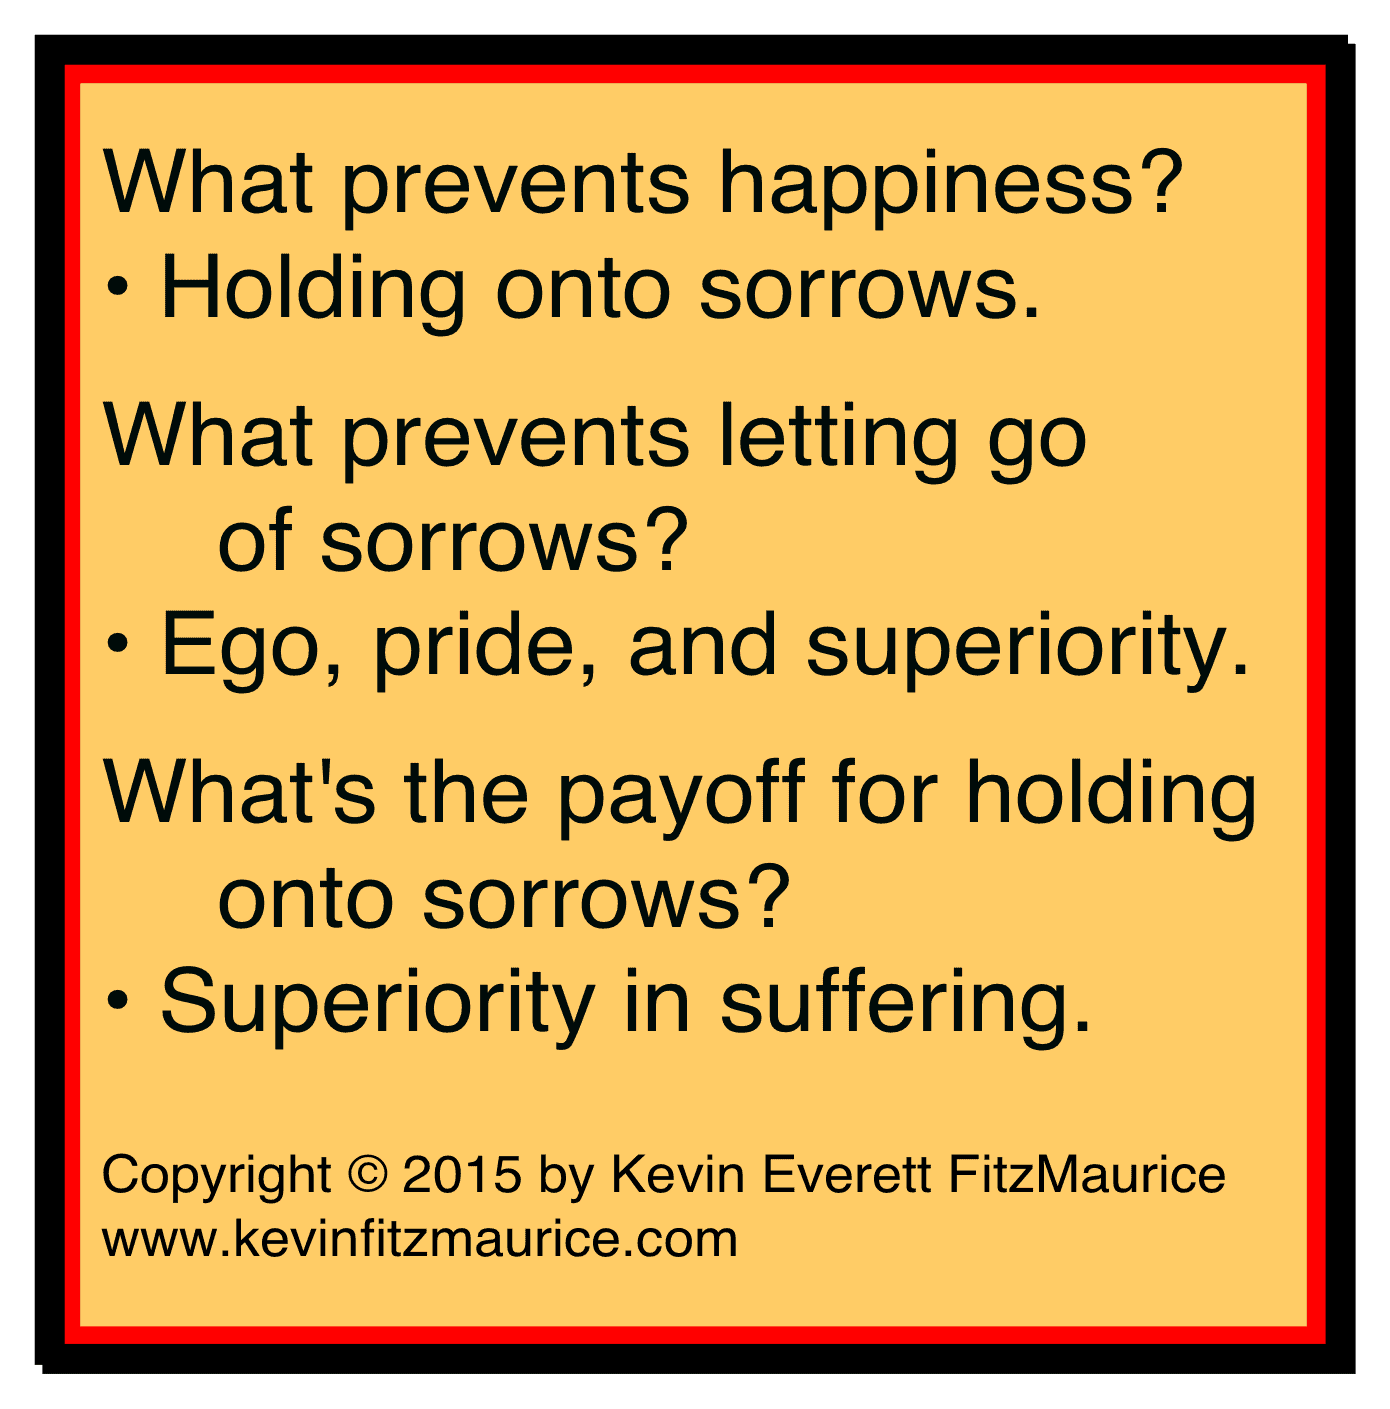 prevent happiness